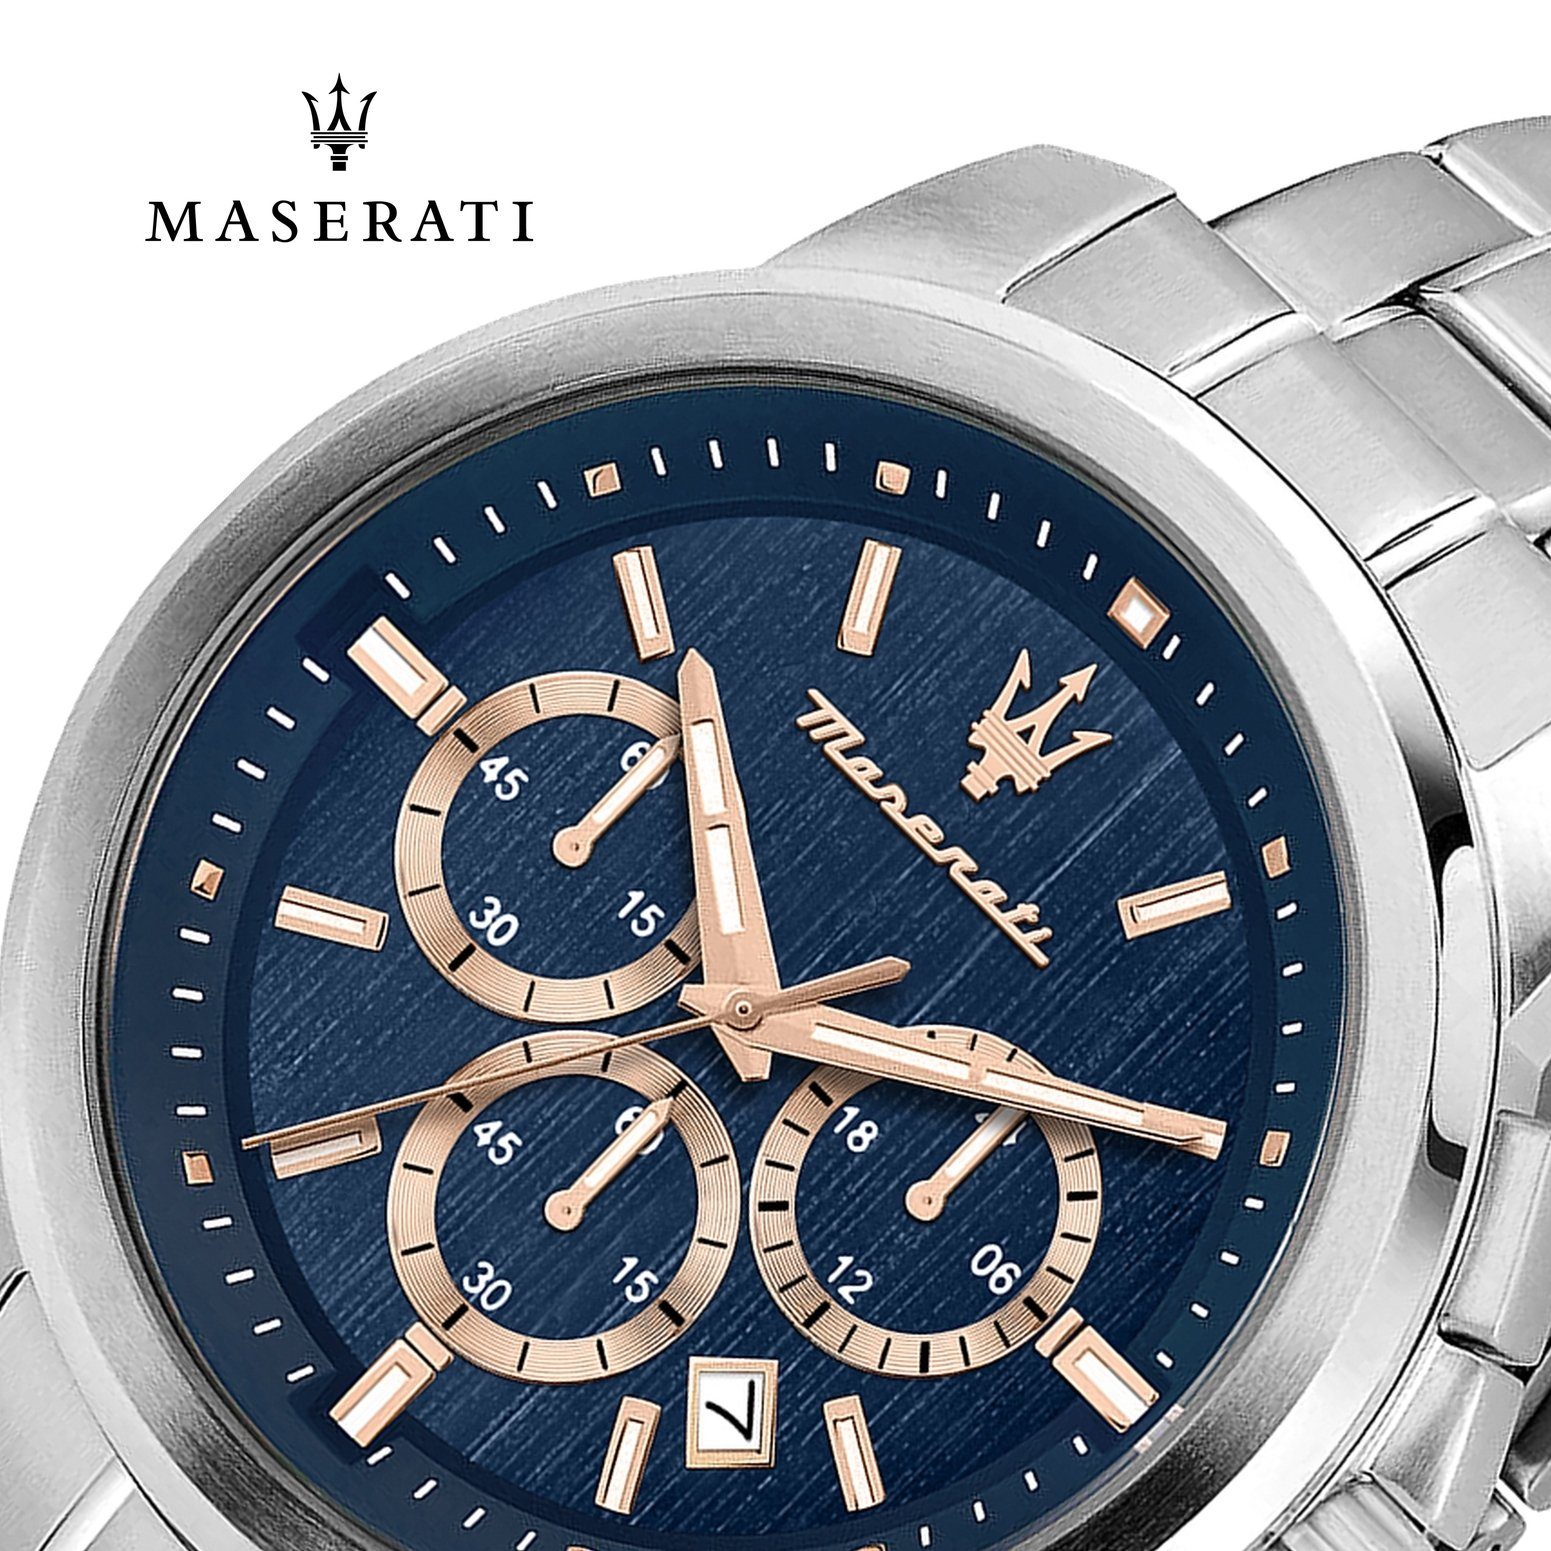 MASERATI Chronograph rund, silber groß 44mm) Edelstahlarmband, (ca. Italy Made-In Maserati Chrono, Herrenuhr blau, Successo roségold, Herrenuhr